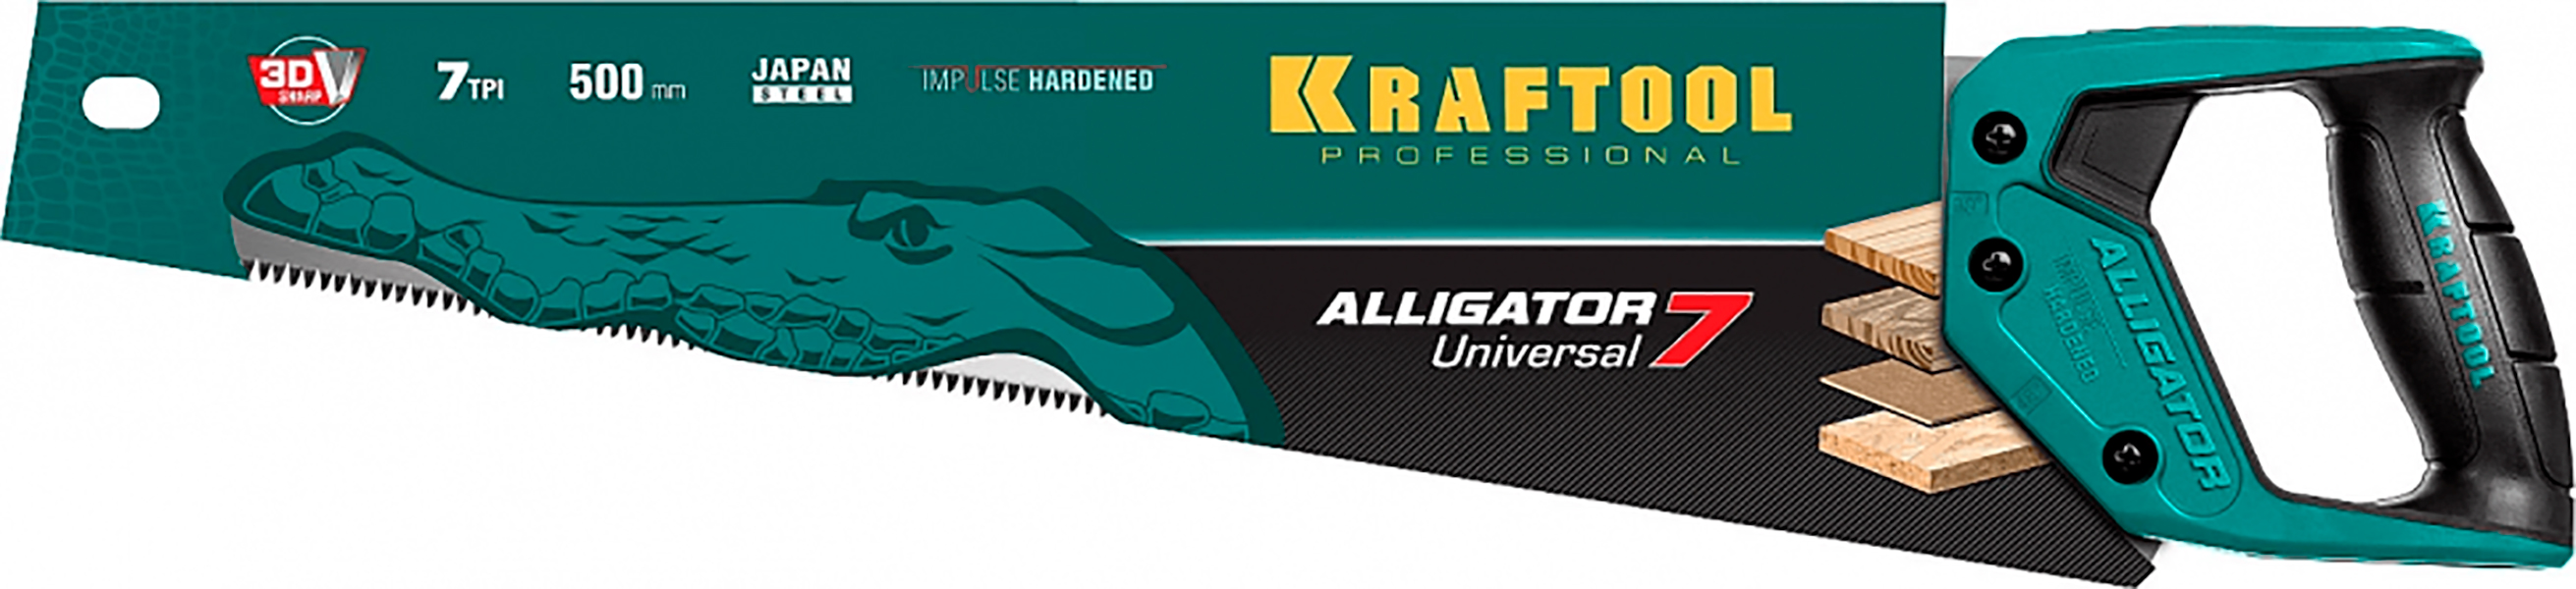 kraftool alligator universal 7 400 мм универсальная ножовка 15004 40 Ножовка универсальная 